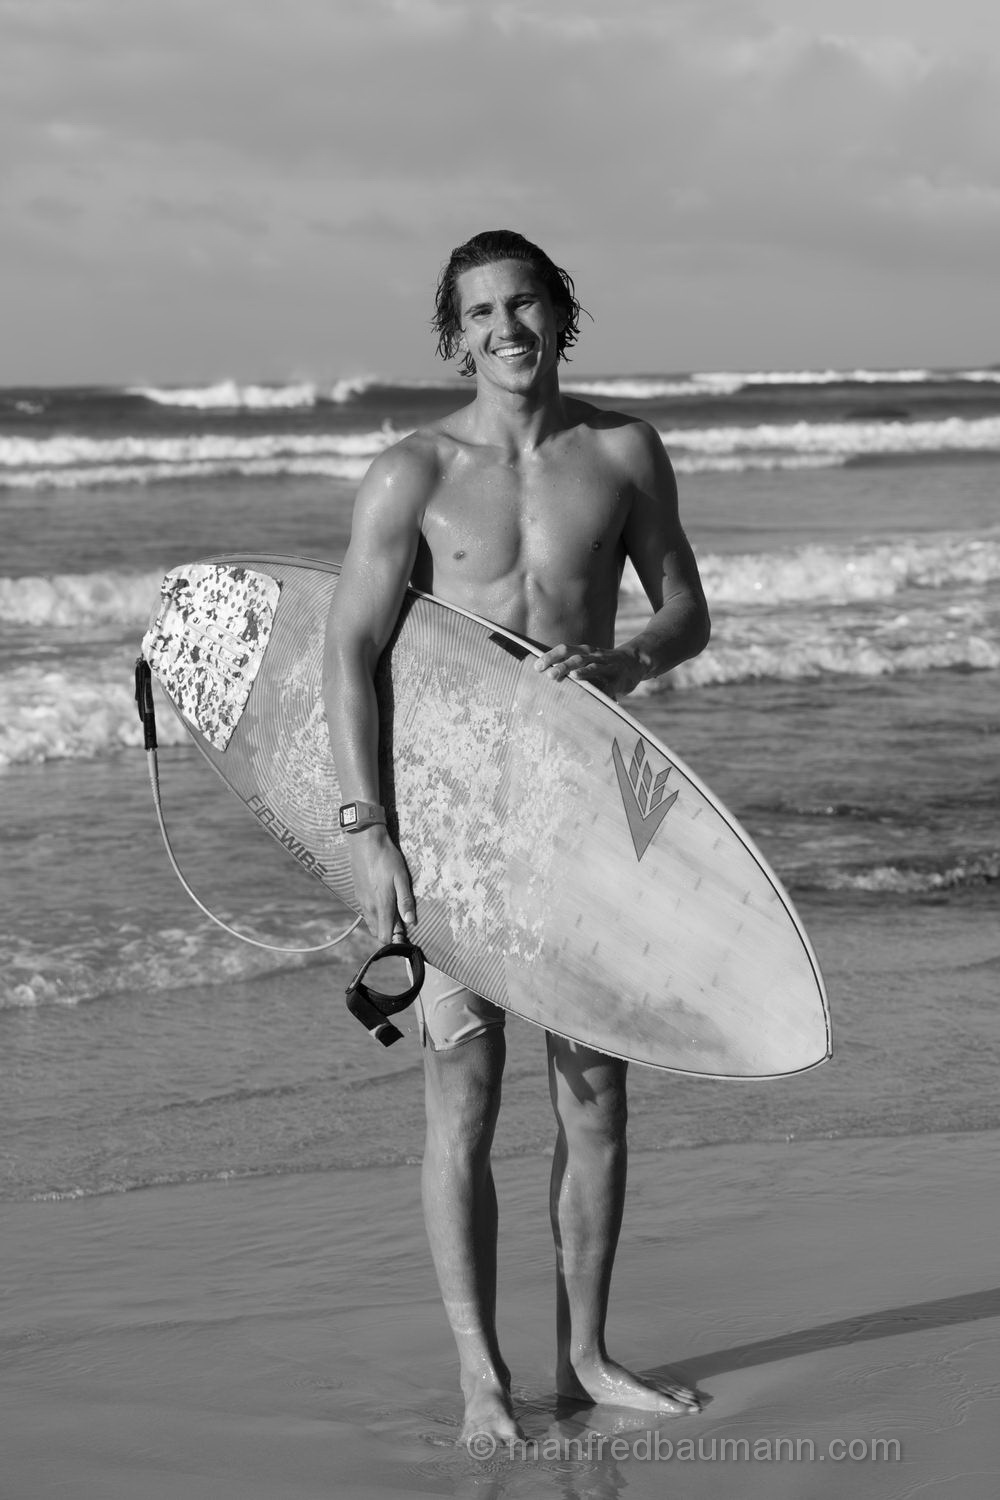 surfer byron bay Australia black and white wave Surfers beach boy girls Paradies